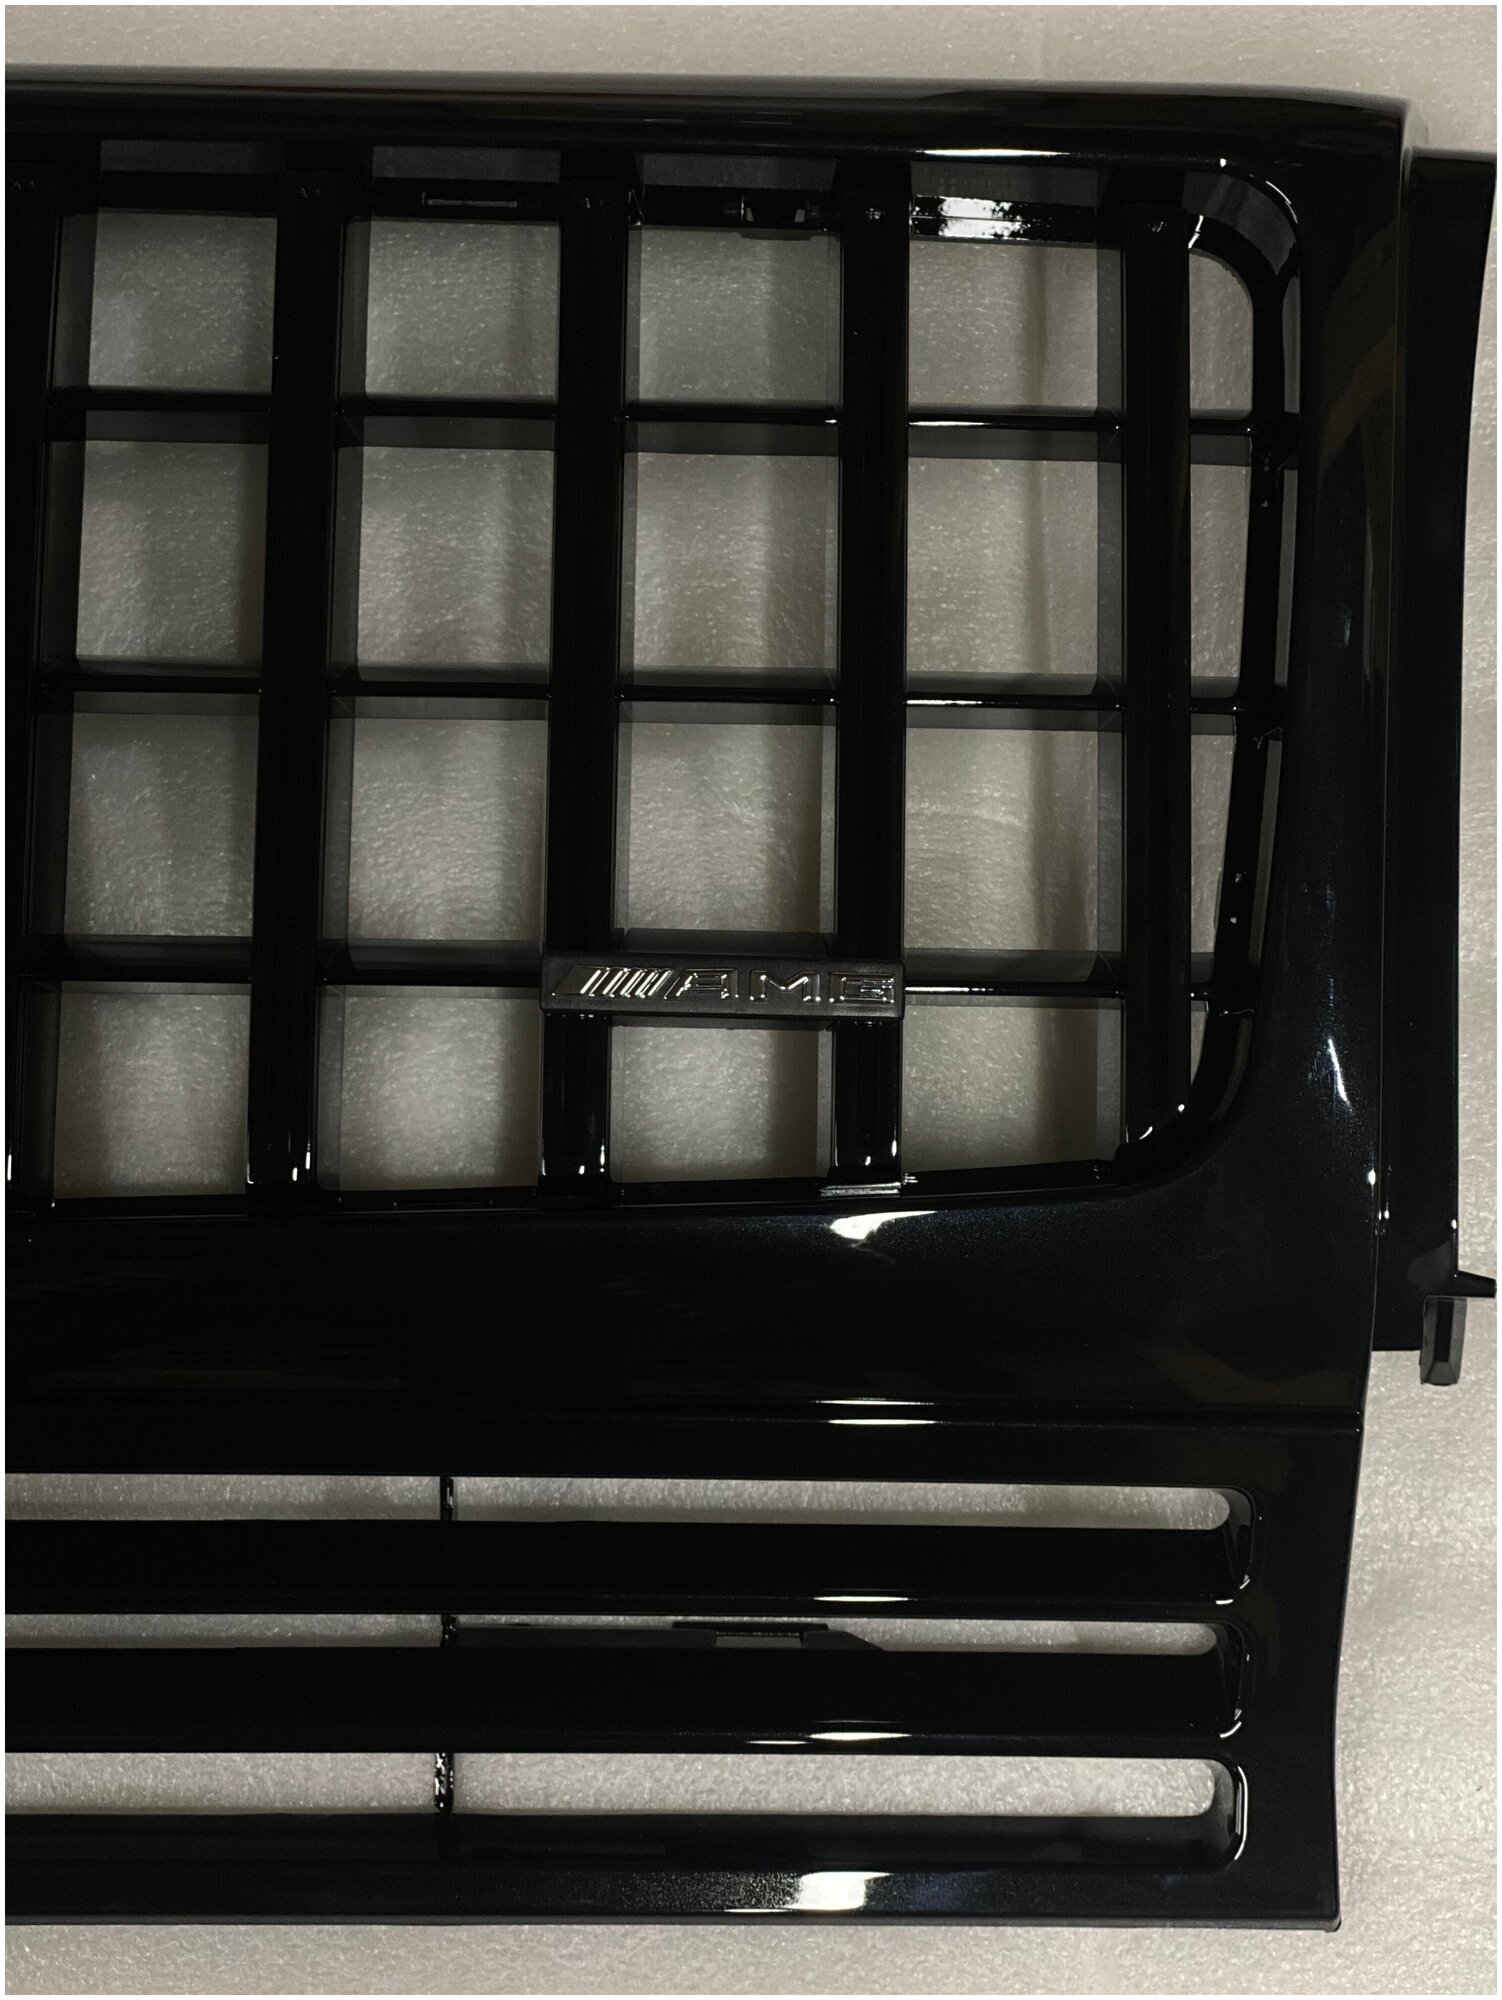 Решетка радиатора AMG GT черная Mercedes G-class W463